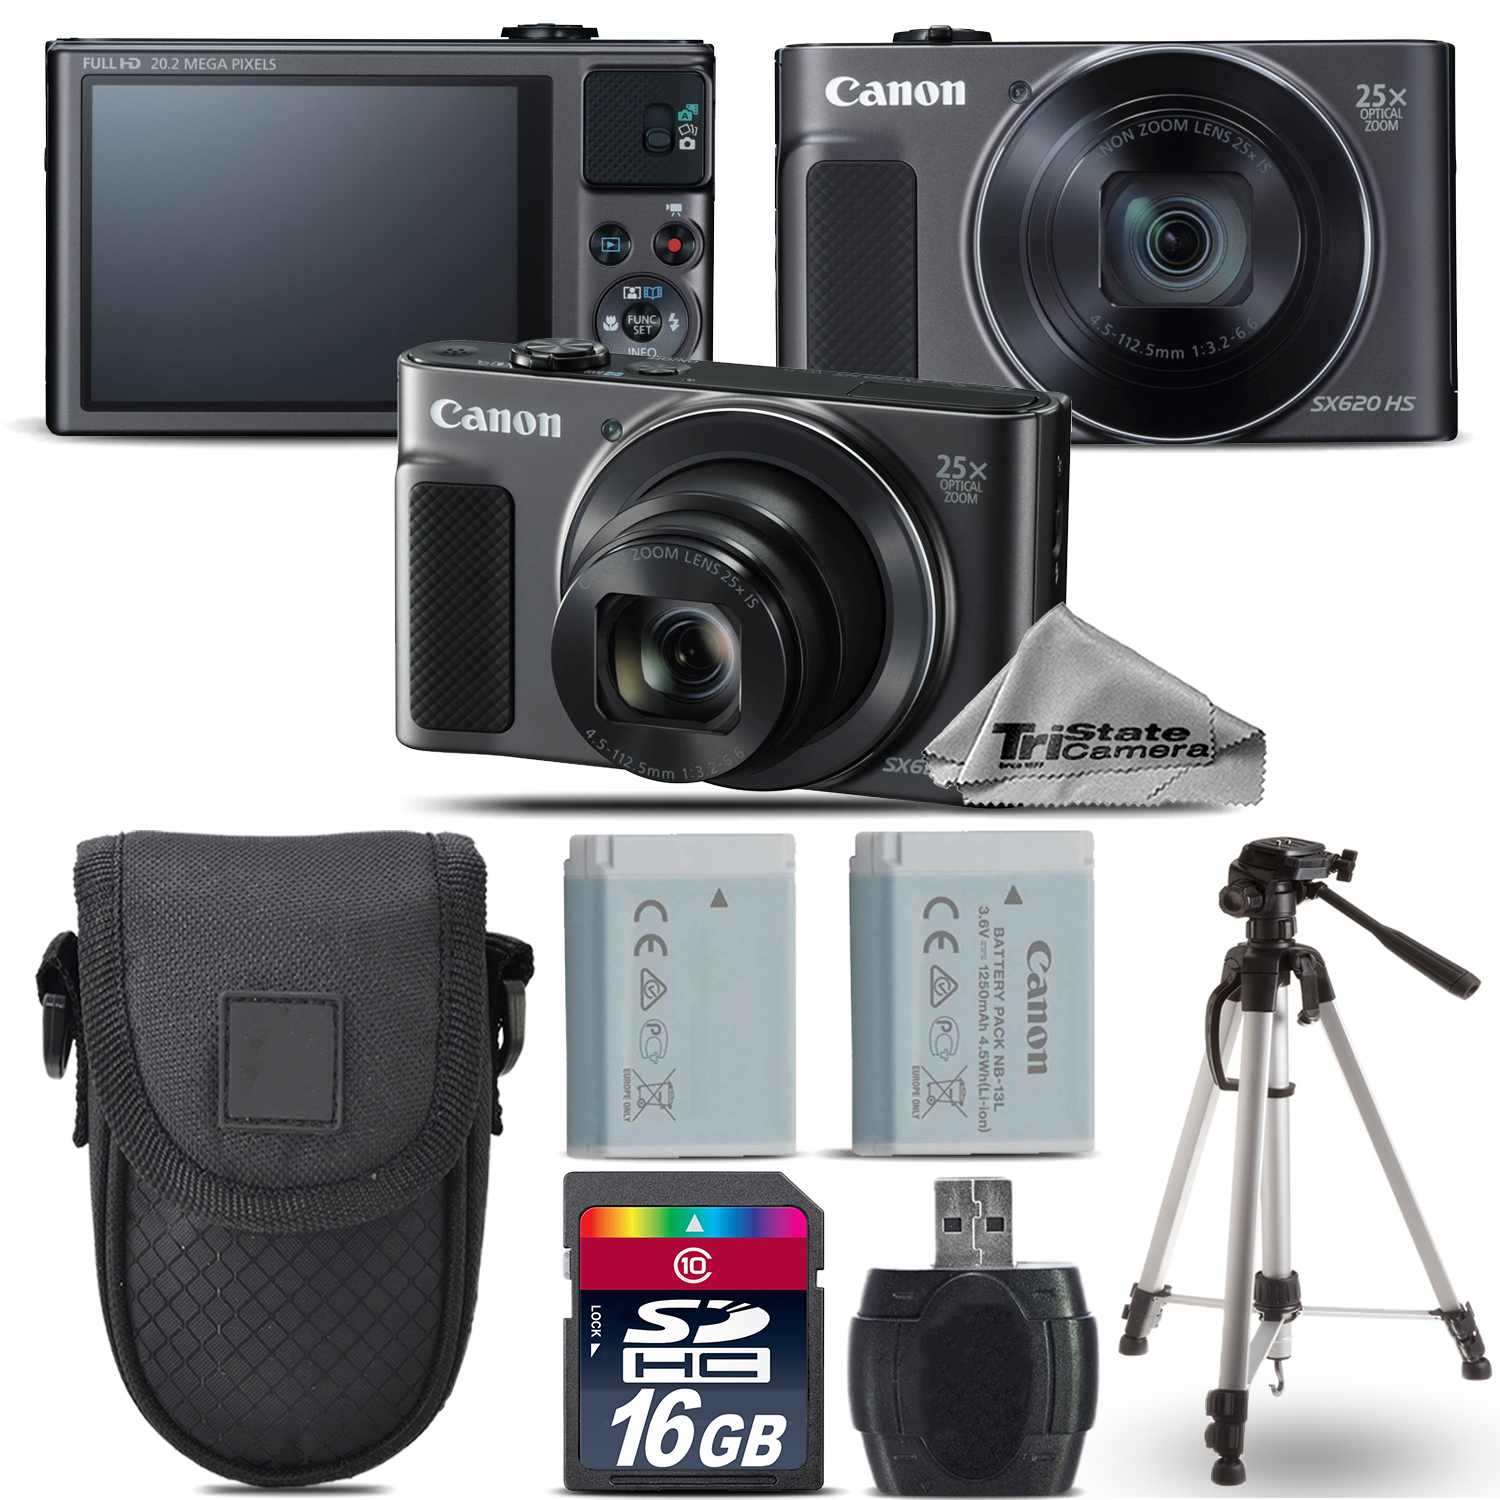 PowerShot SX620 HS Camera (Black) + Extra Battery +Tripod + Case -16GB Kit *FREE SHIPPING*